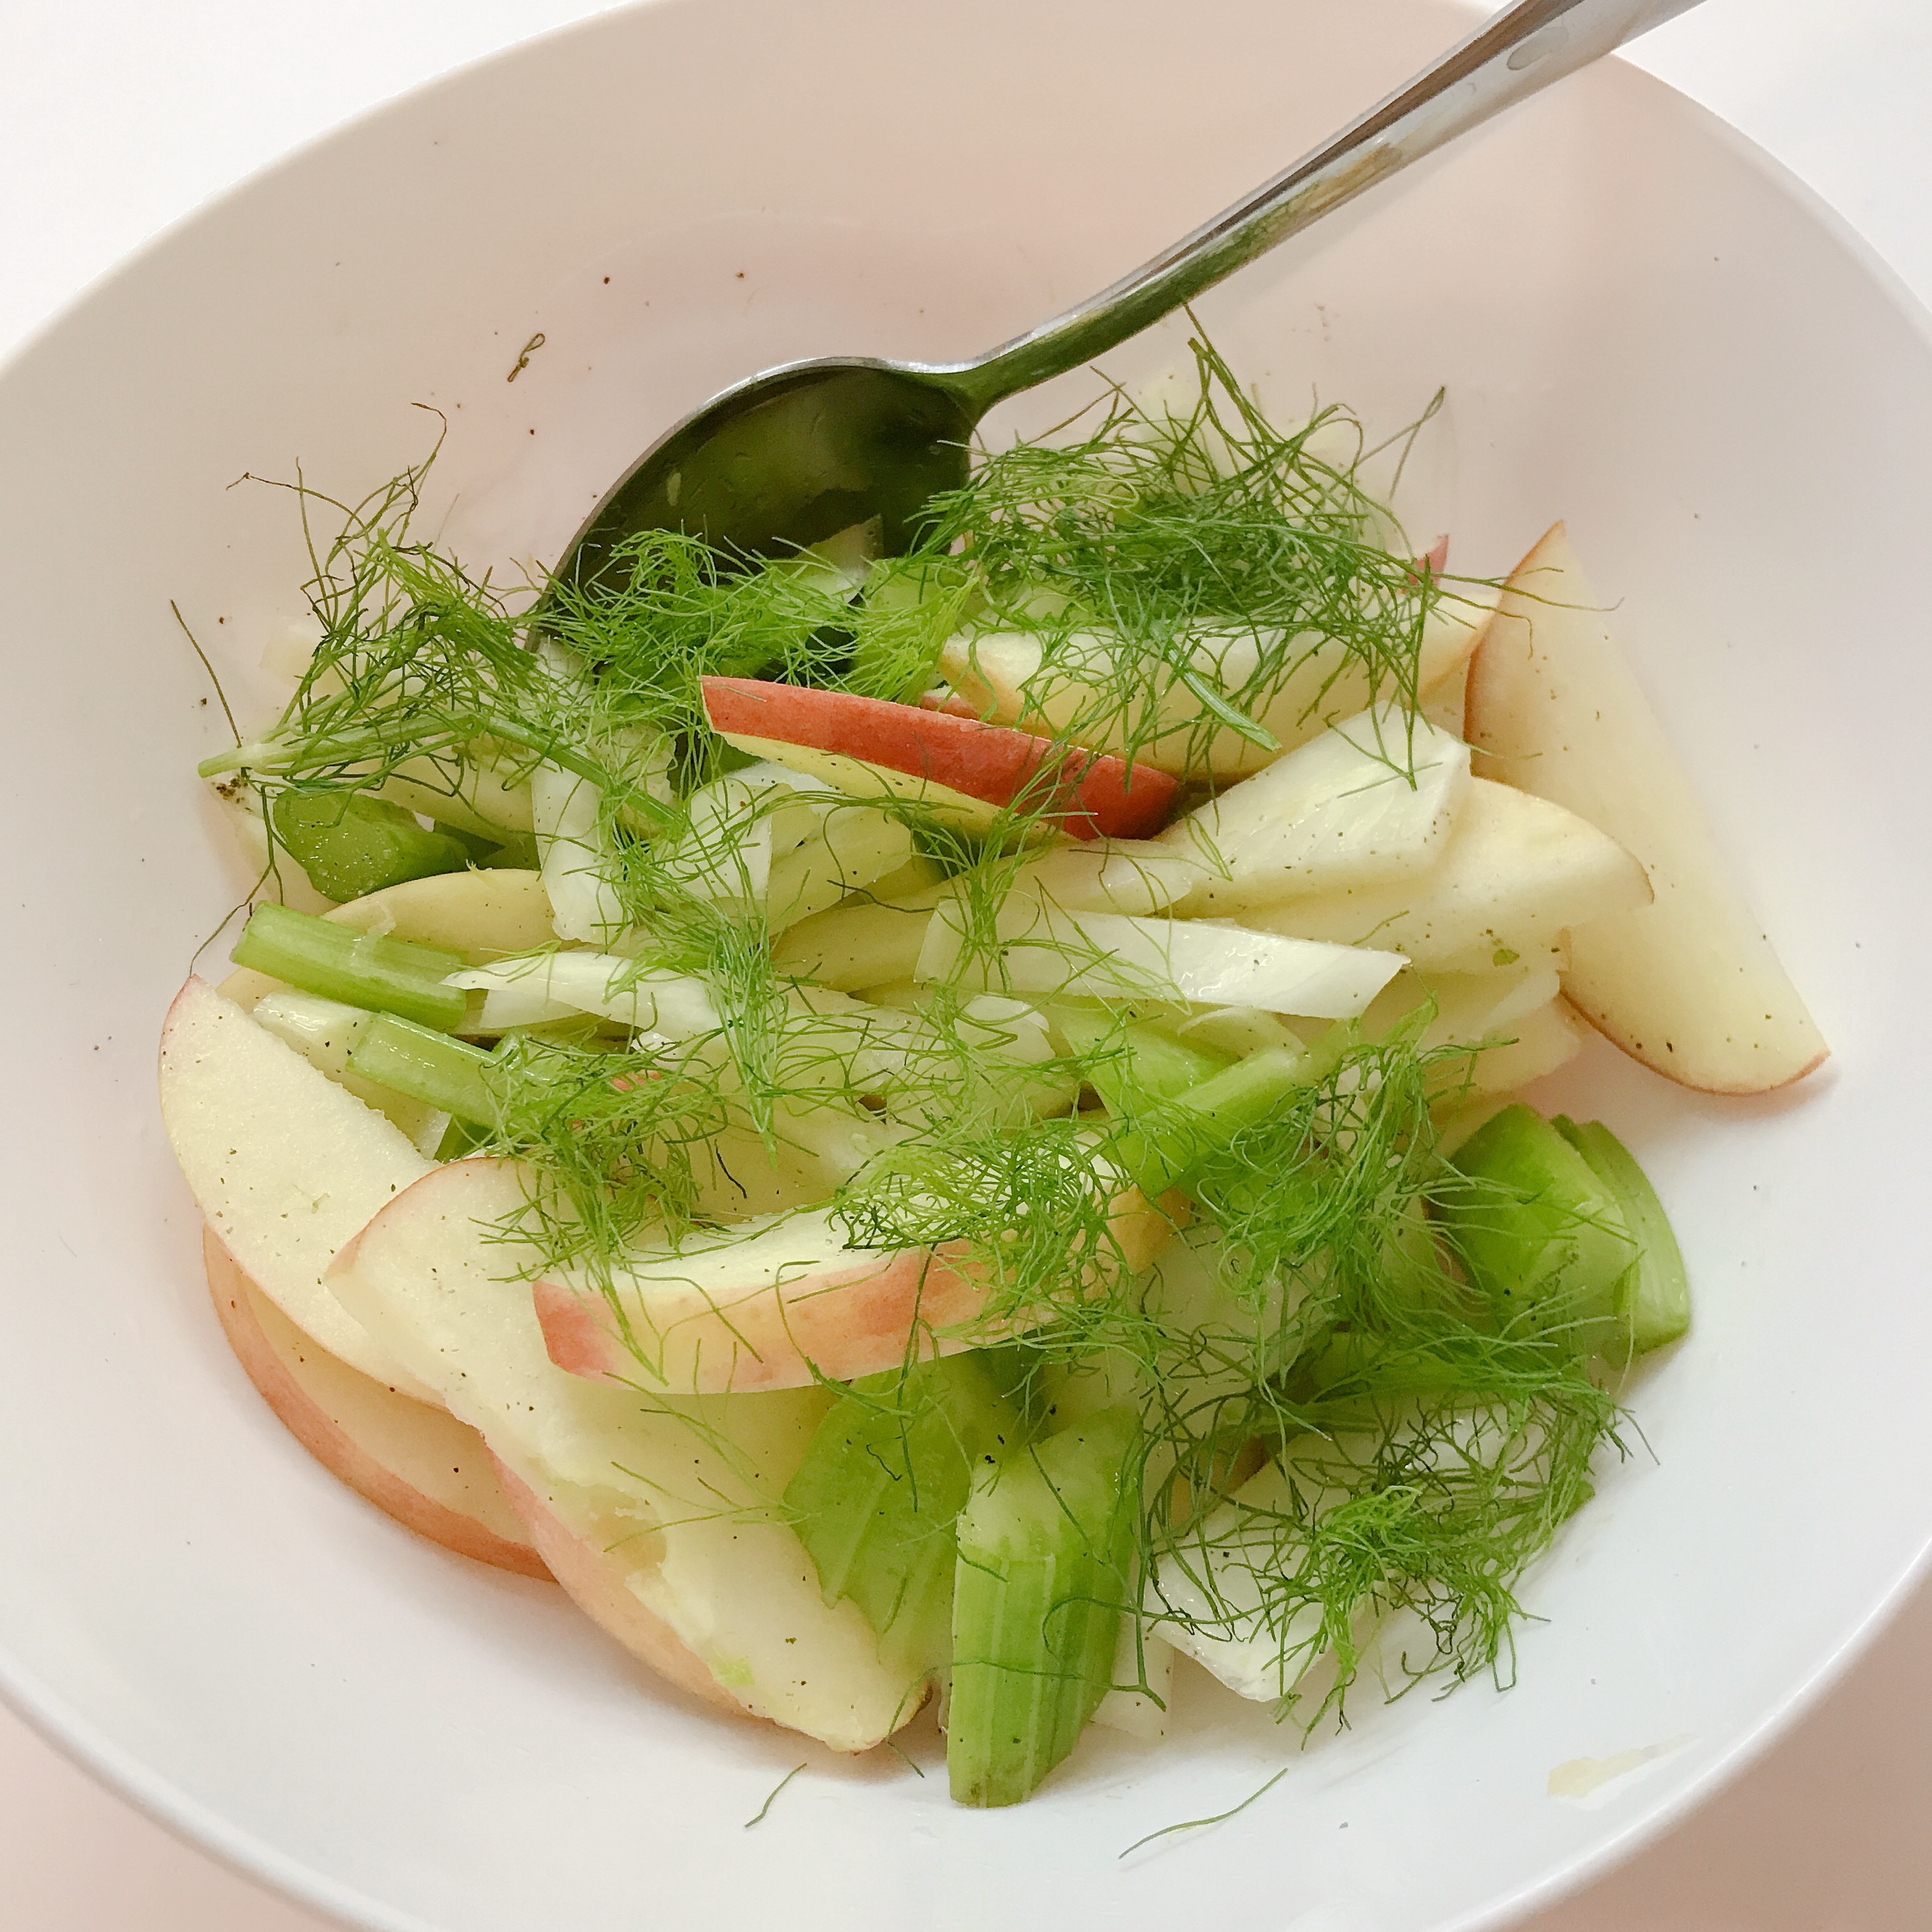 苹果芹菜沙拉（apple fennel celery salad）